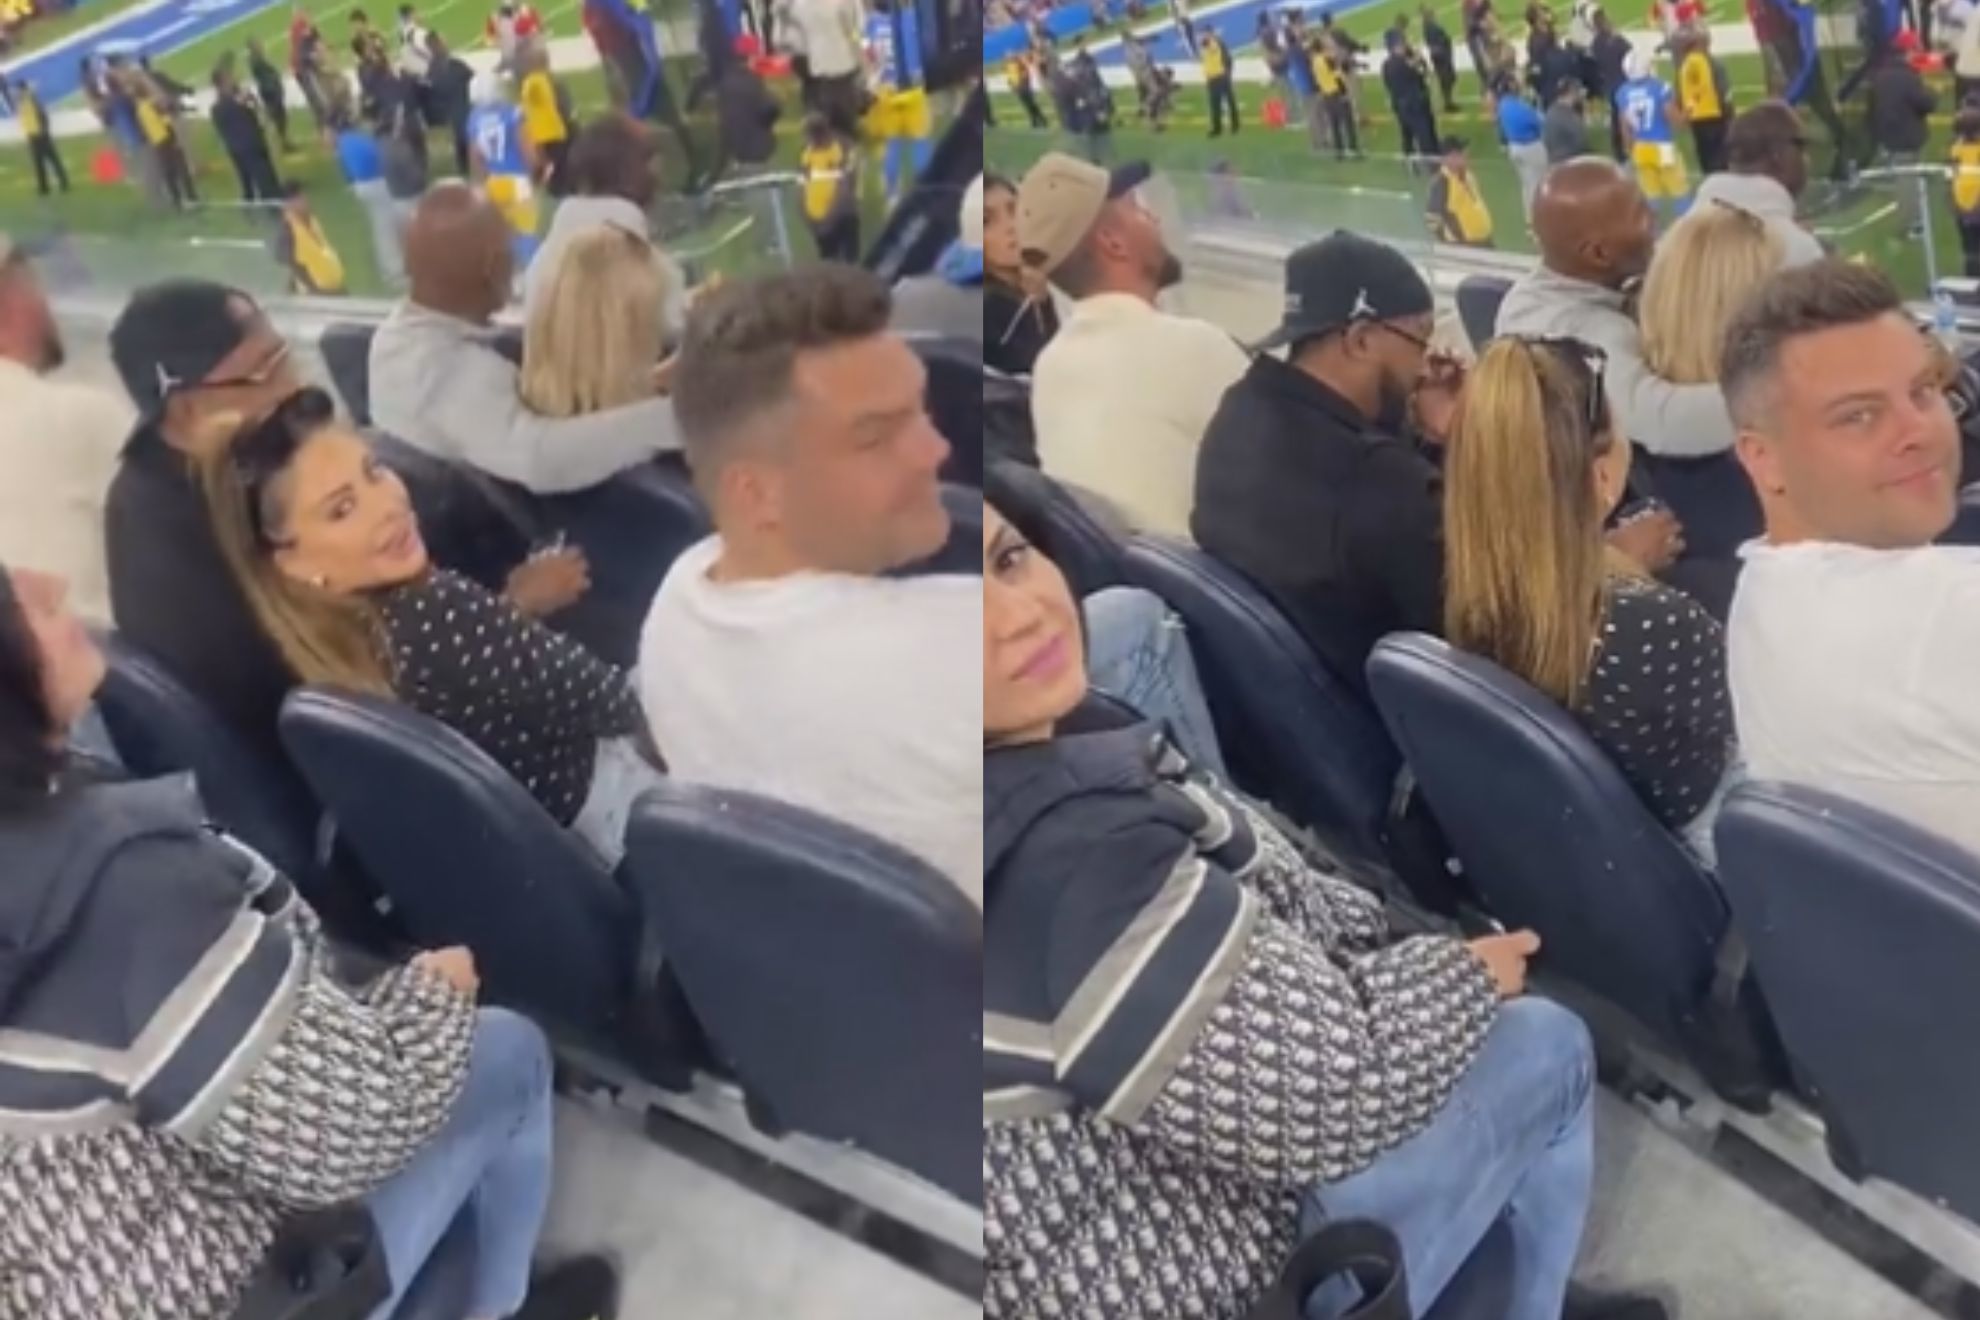 Marcus Jordan and Larsa Pippen heckled at SoFi Stadium